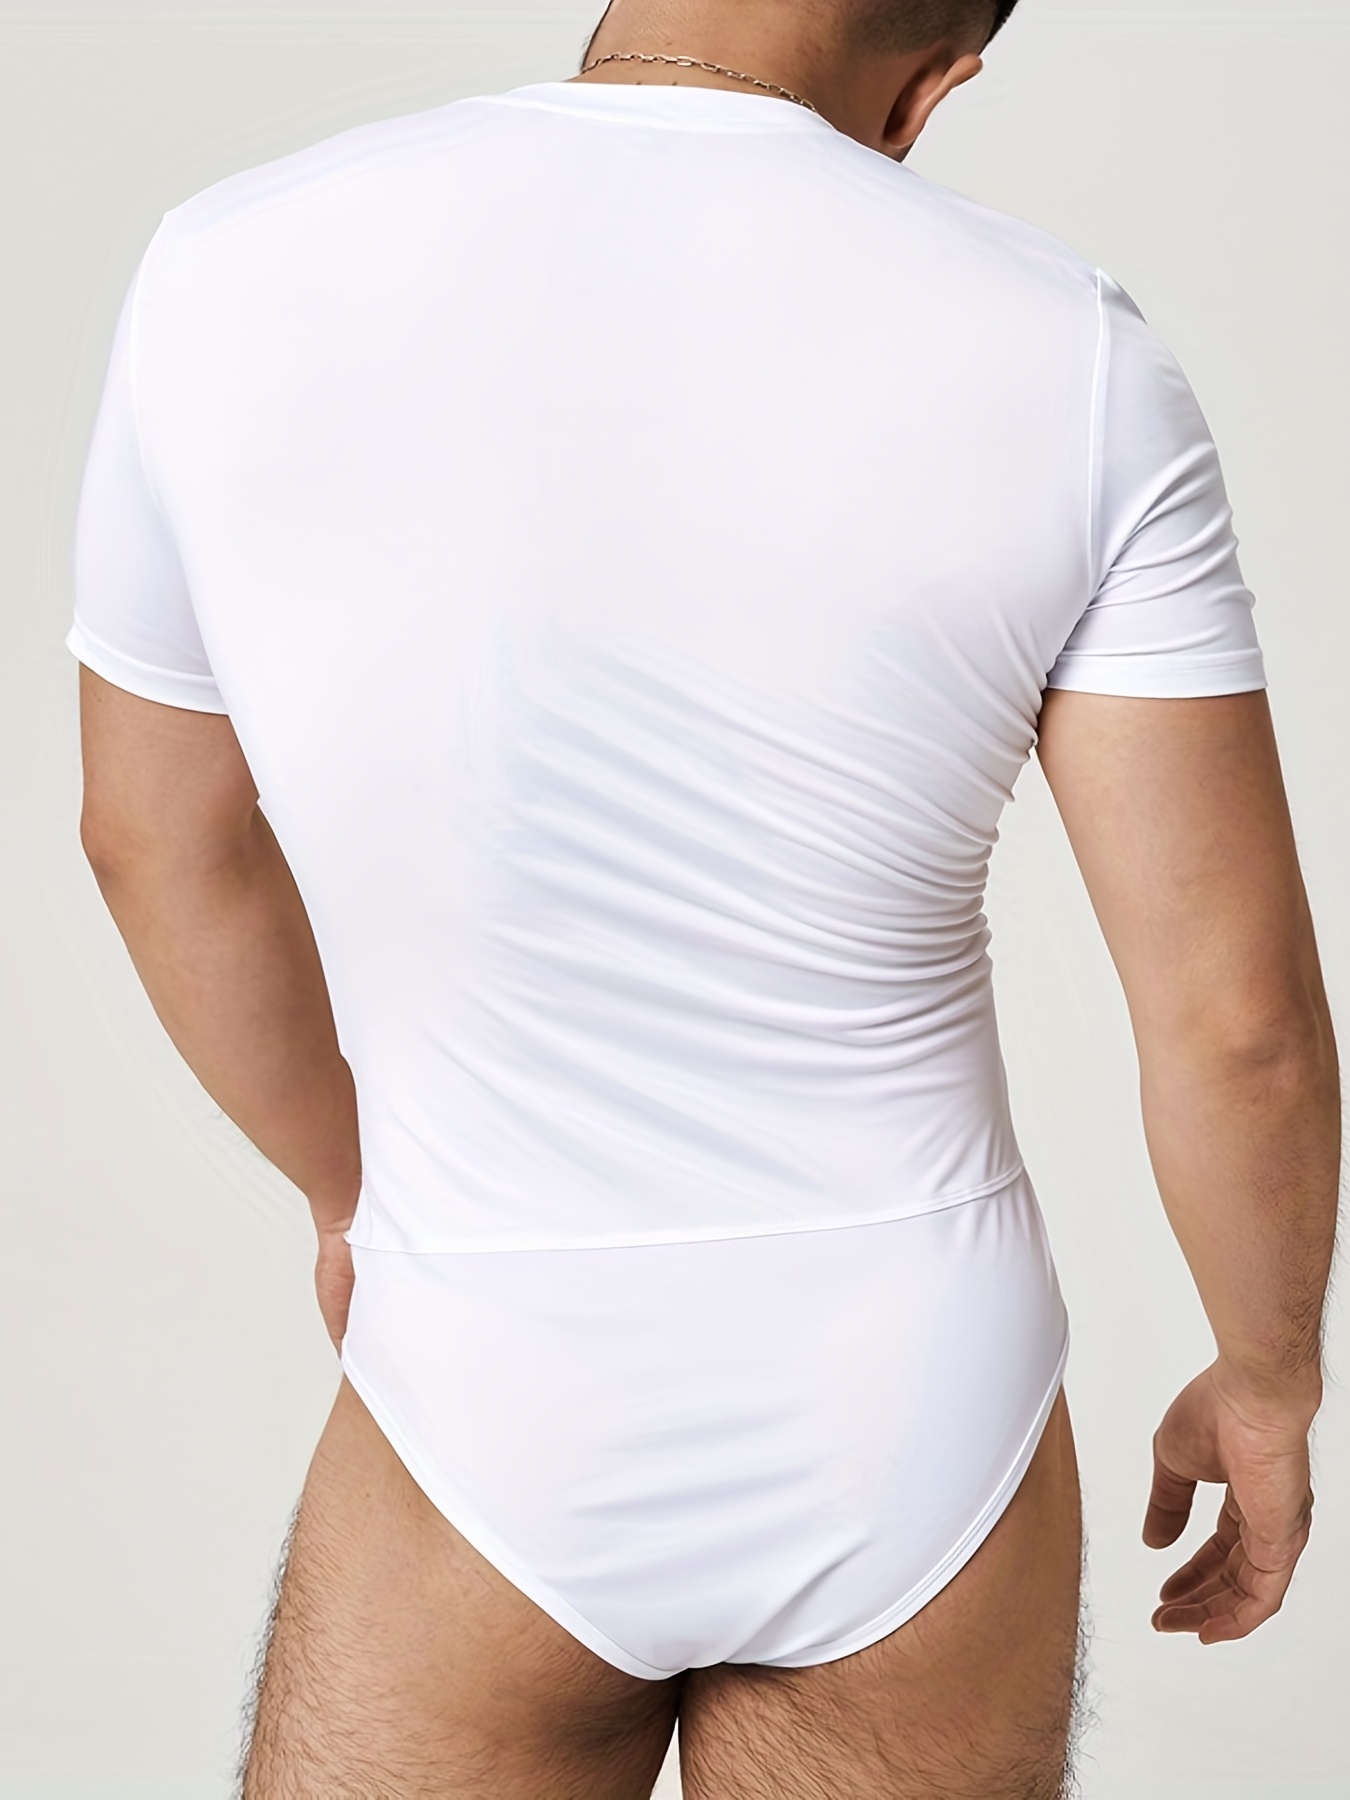 INCERUN Men's Sleeveless Leotard Cutout Jumpsuit Bodysuit